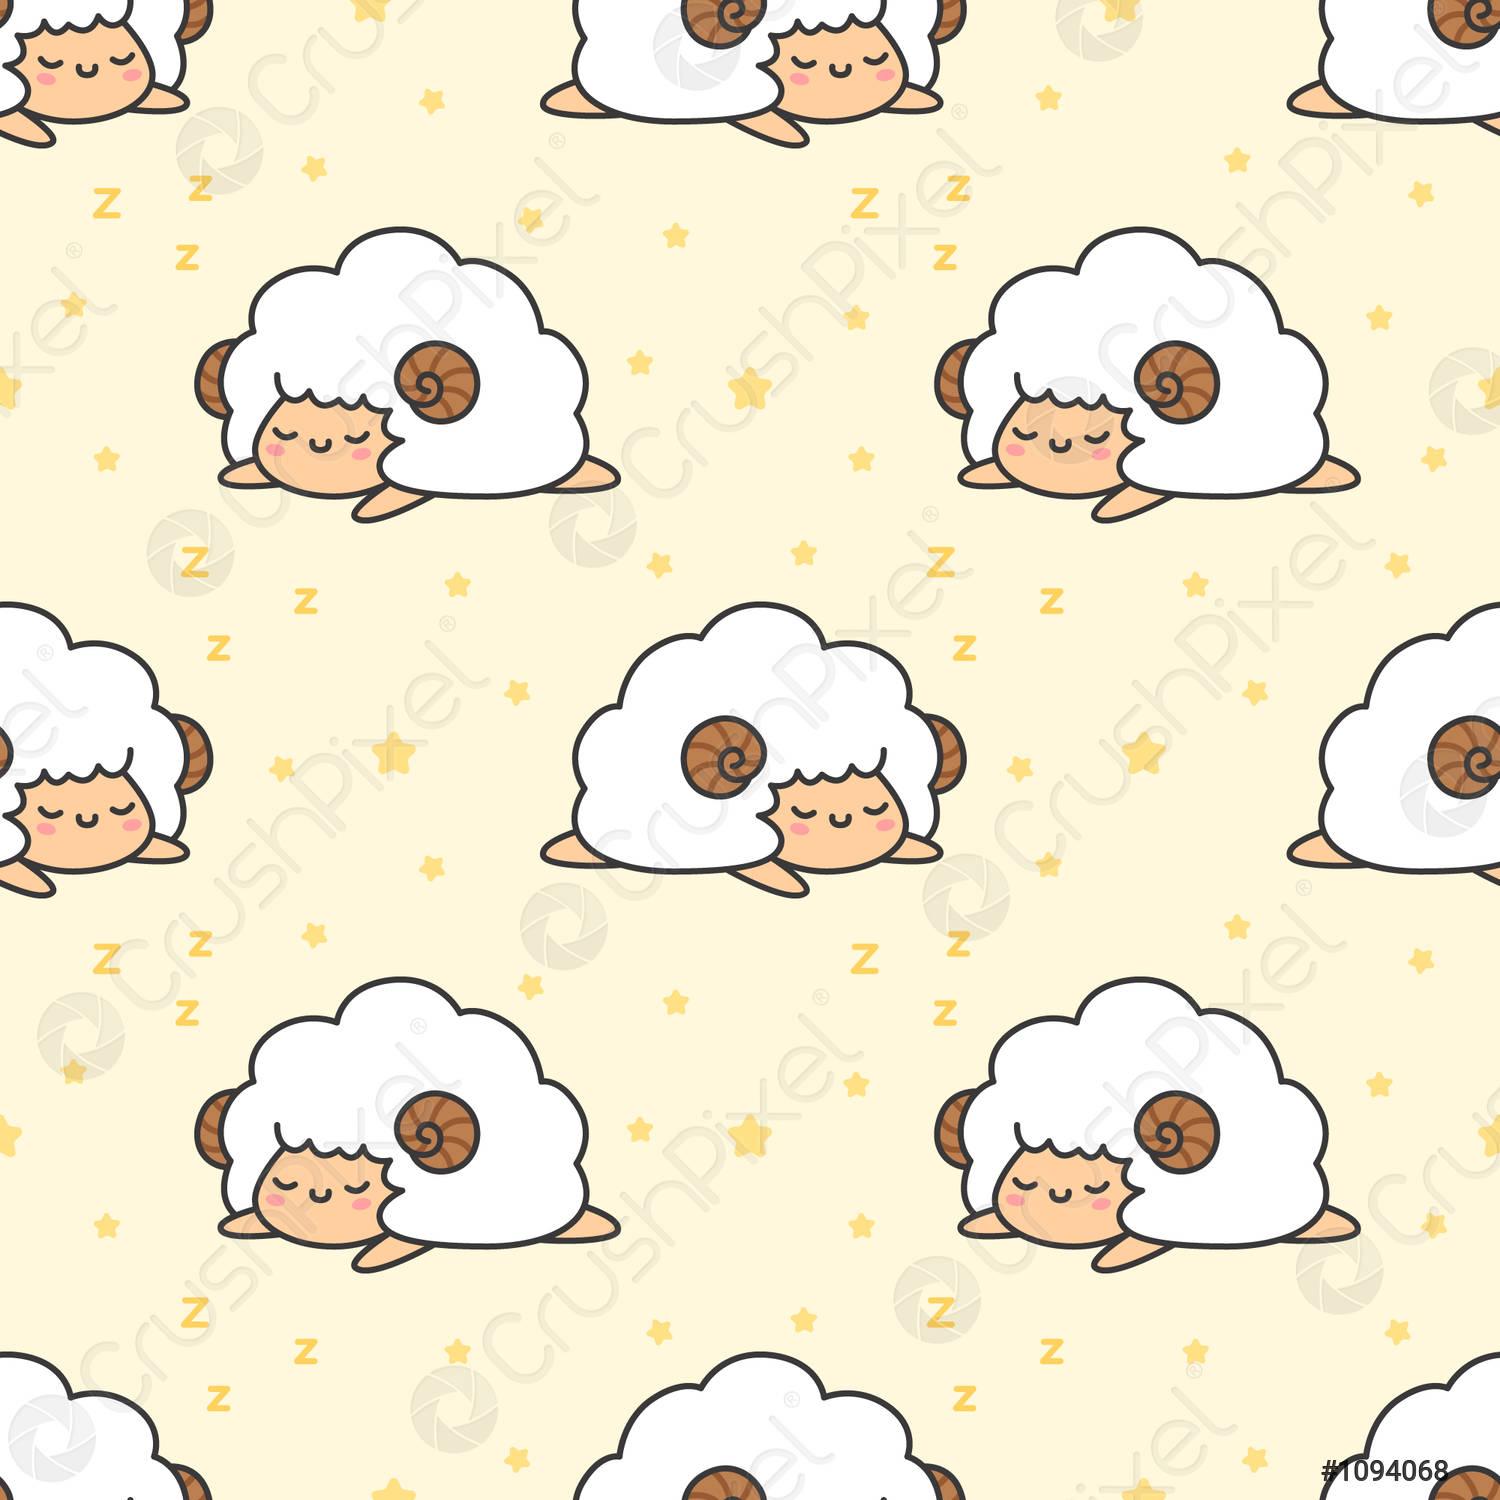 Kawaii Sheep Wallpapers - Top Free Kawaii Sheep Backgrounds ...